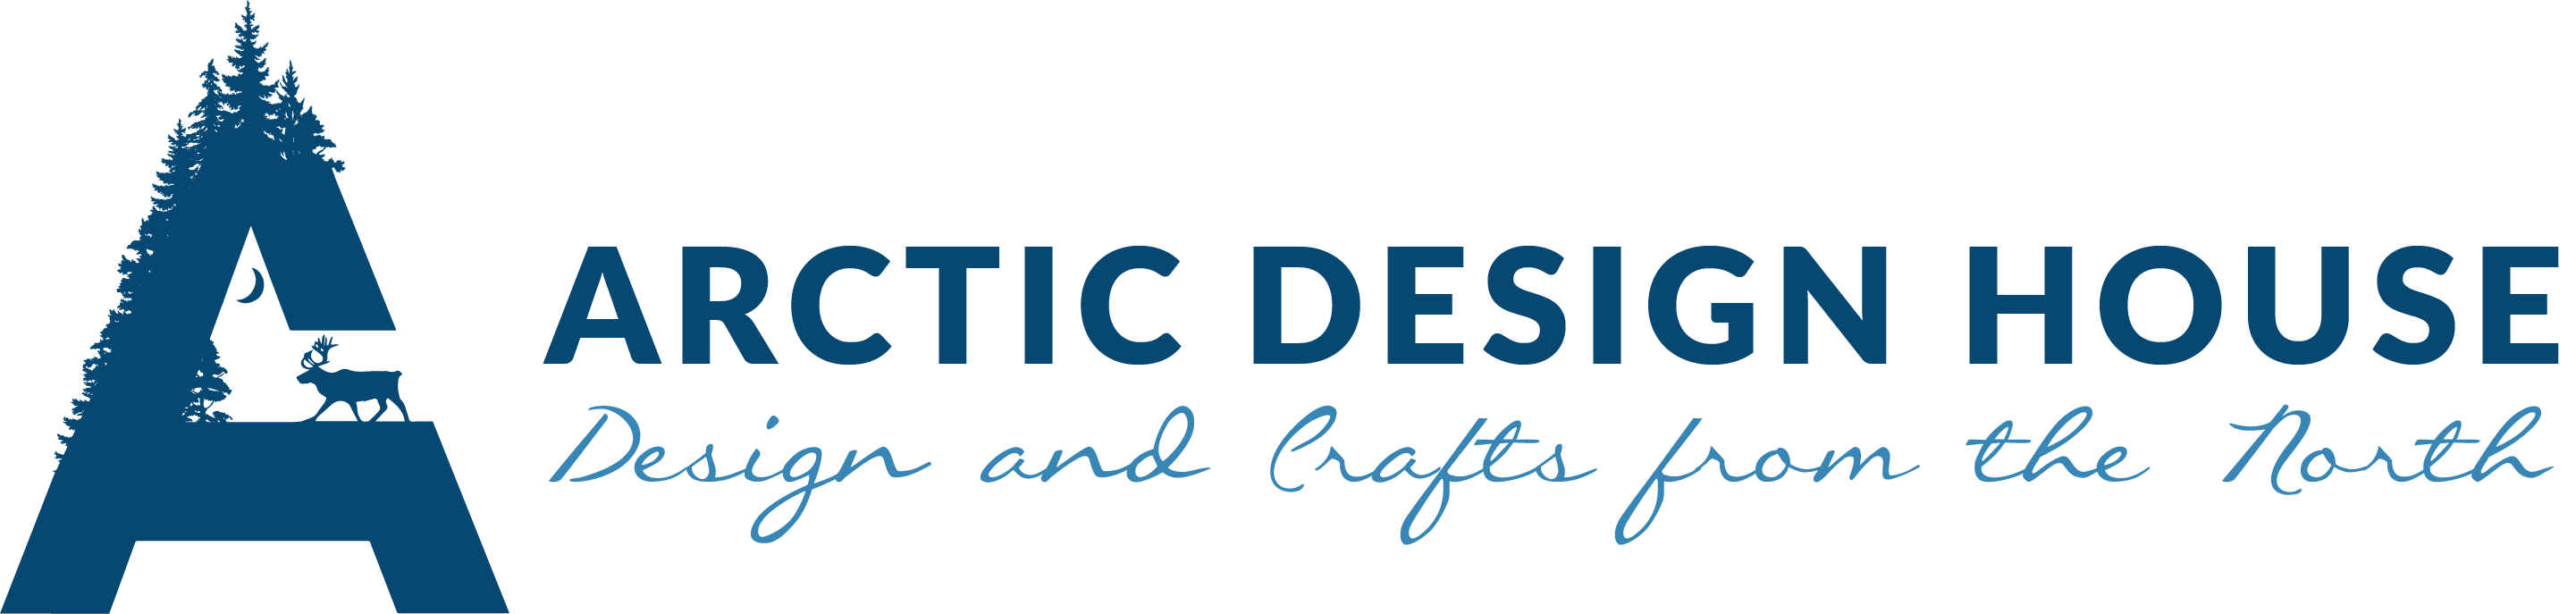 Arctic Design House